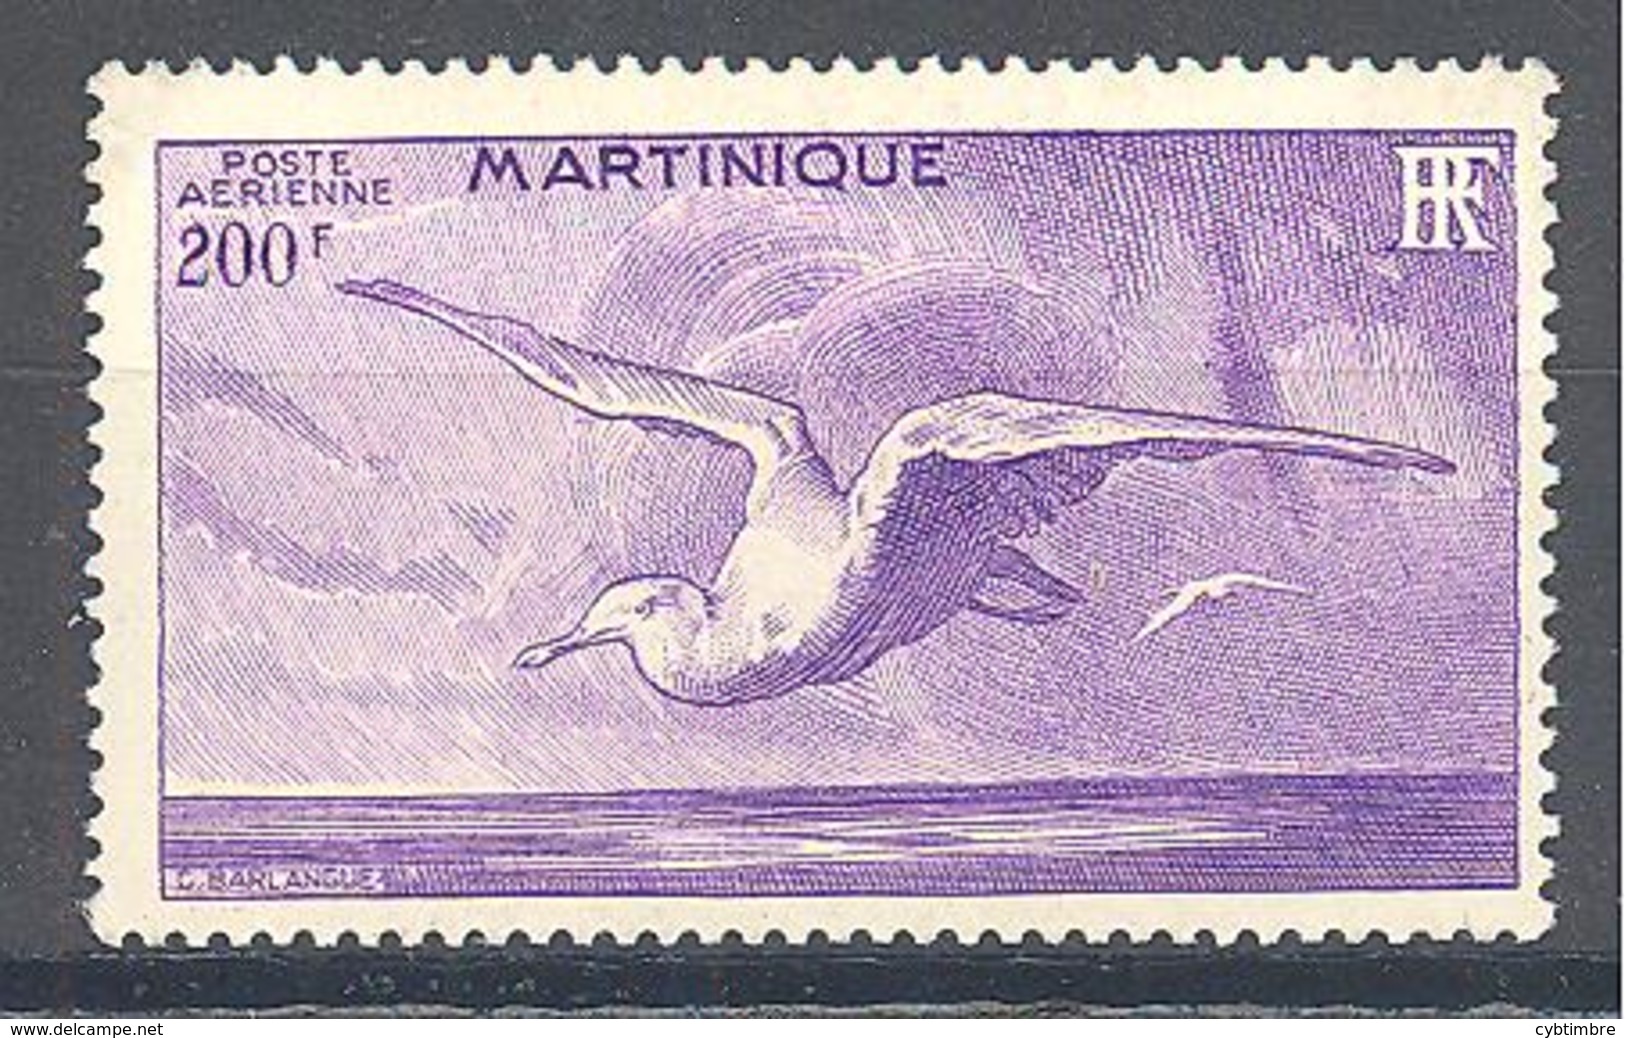 Martinique: Yvert N° A 15*; Oiseau; Bird; Mouette - Luftpost